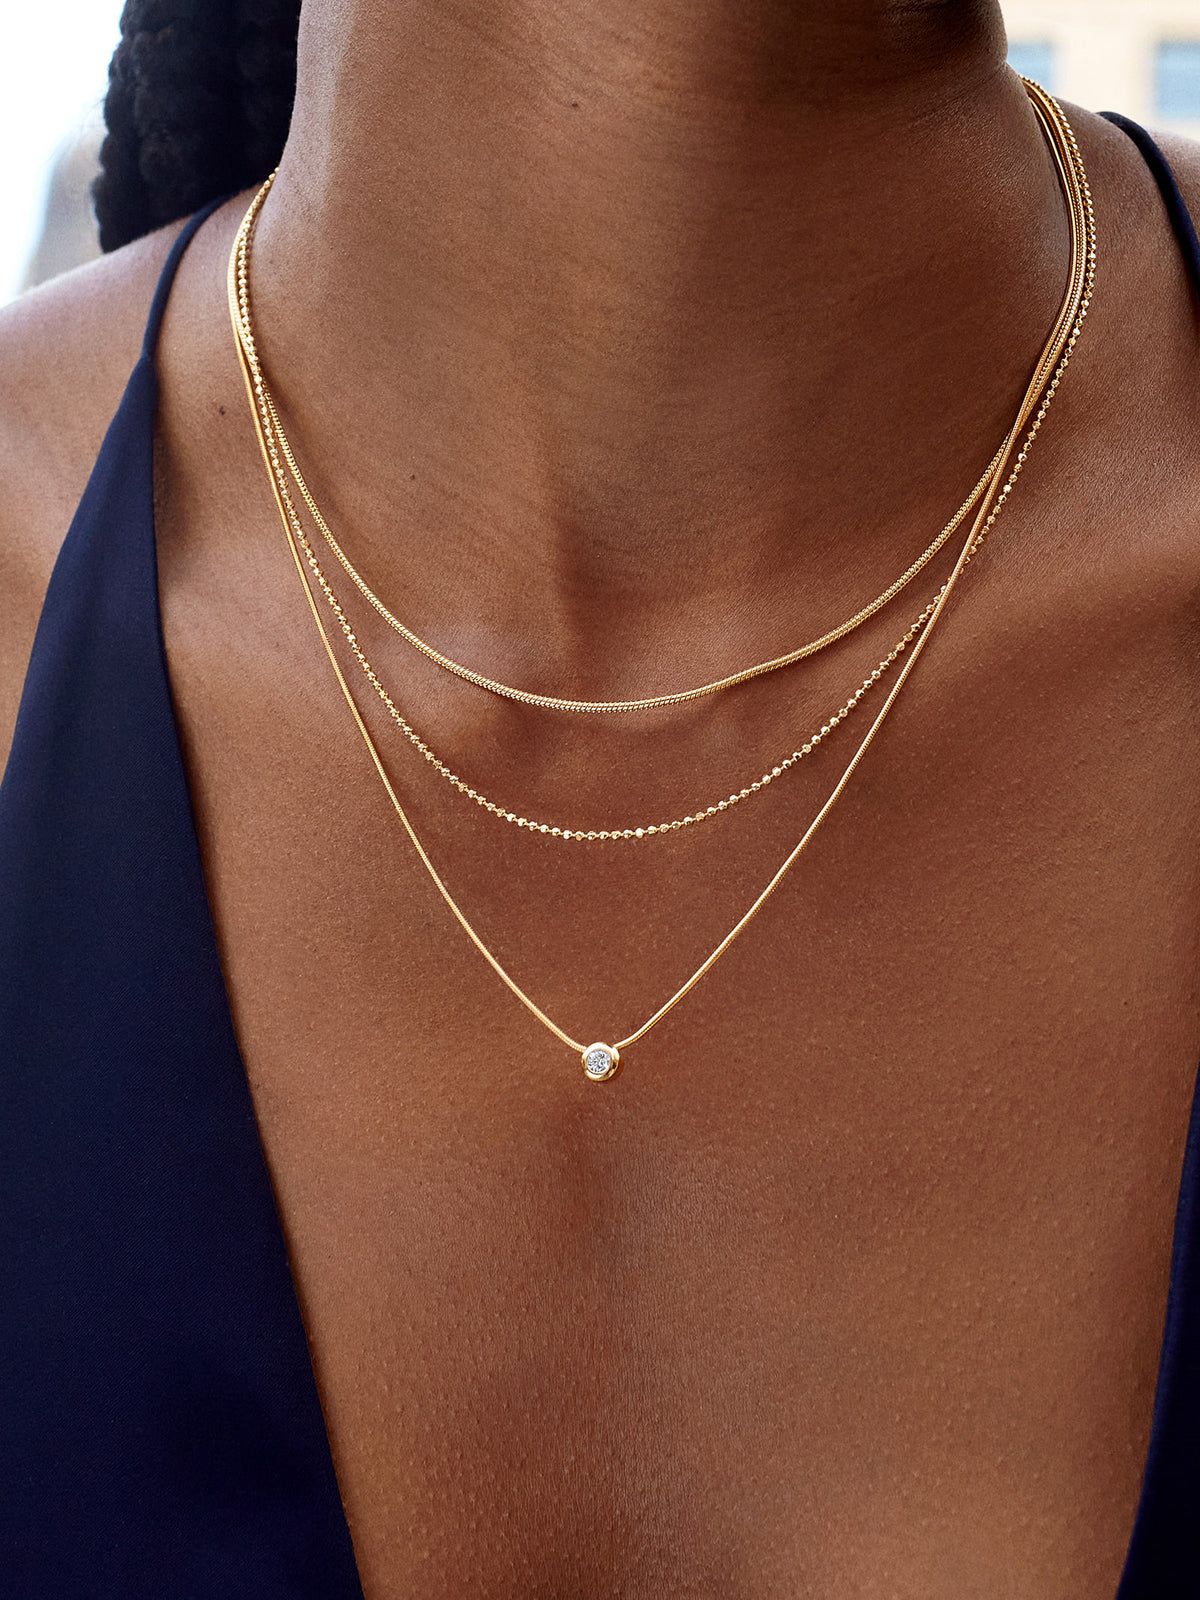 Elegant Adornments: Gold Necklace Designs That Dazzle